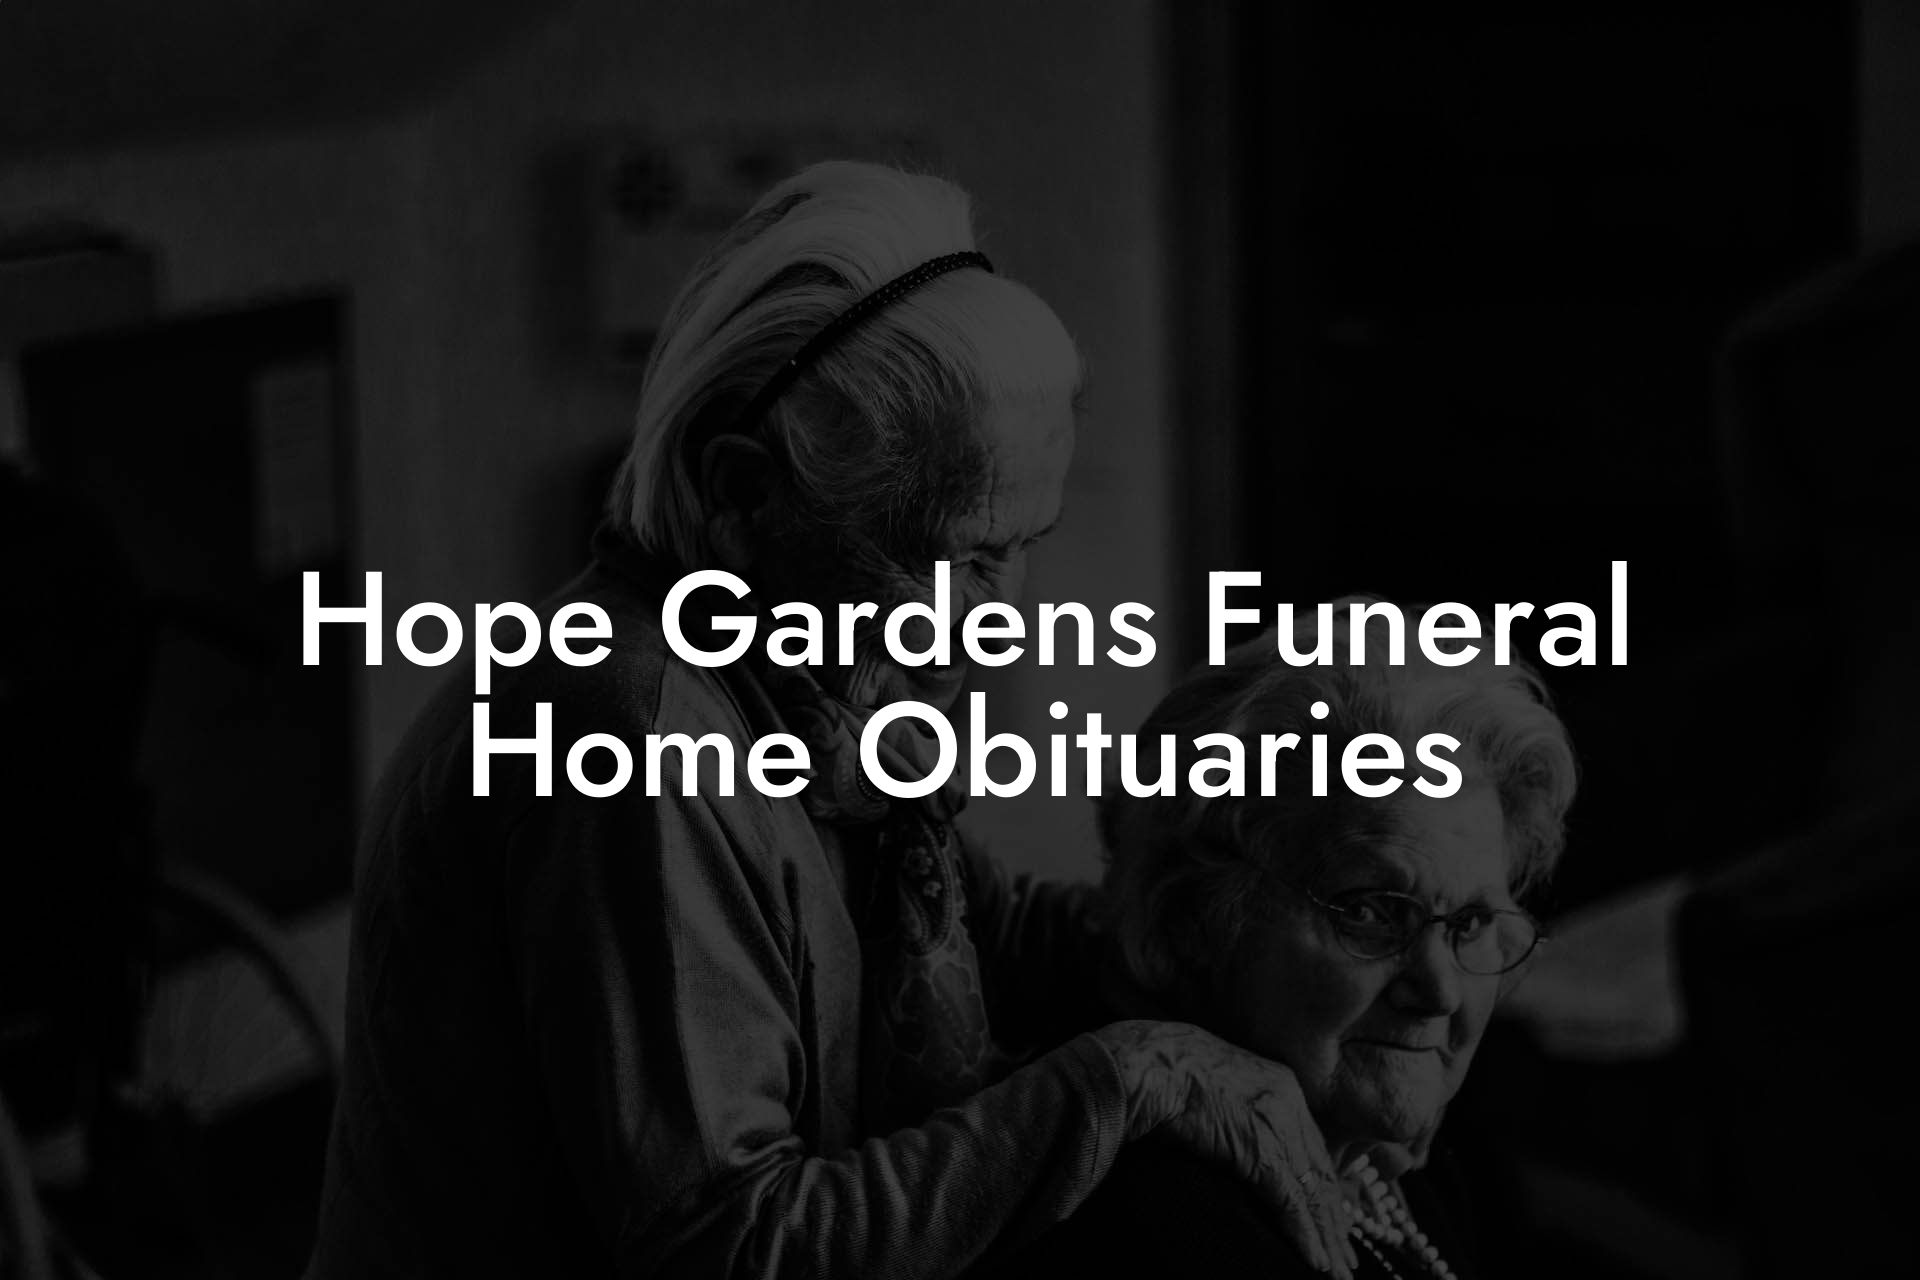 Hope Gardens Funeral Home Obituaries